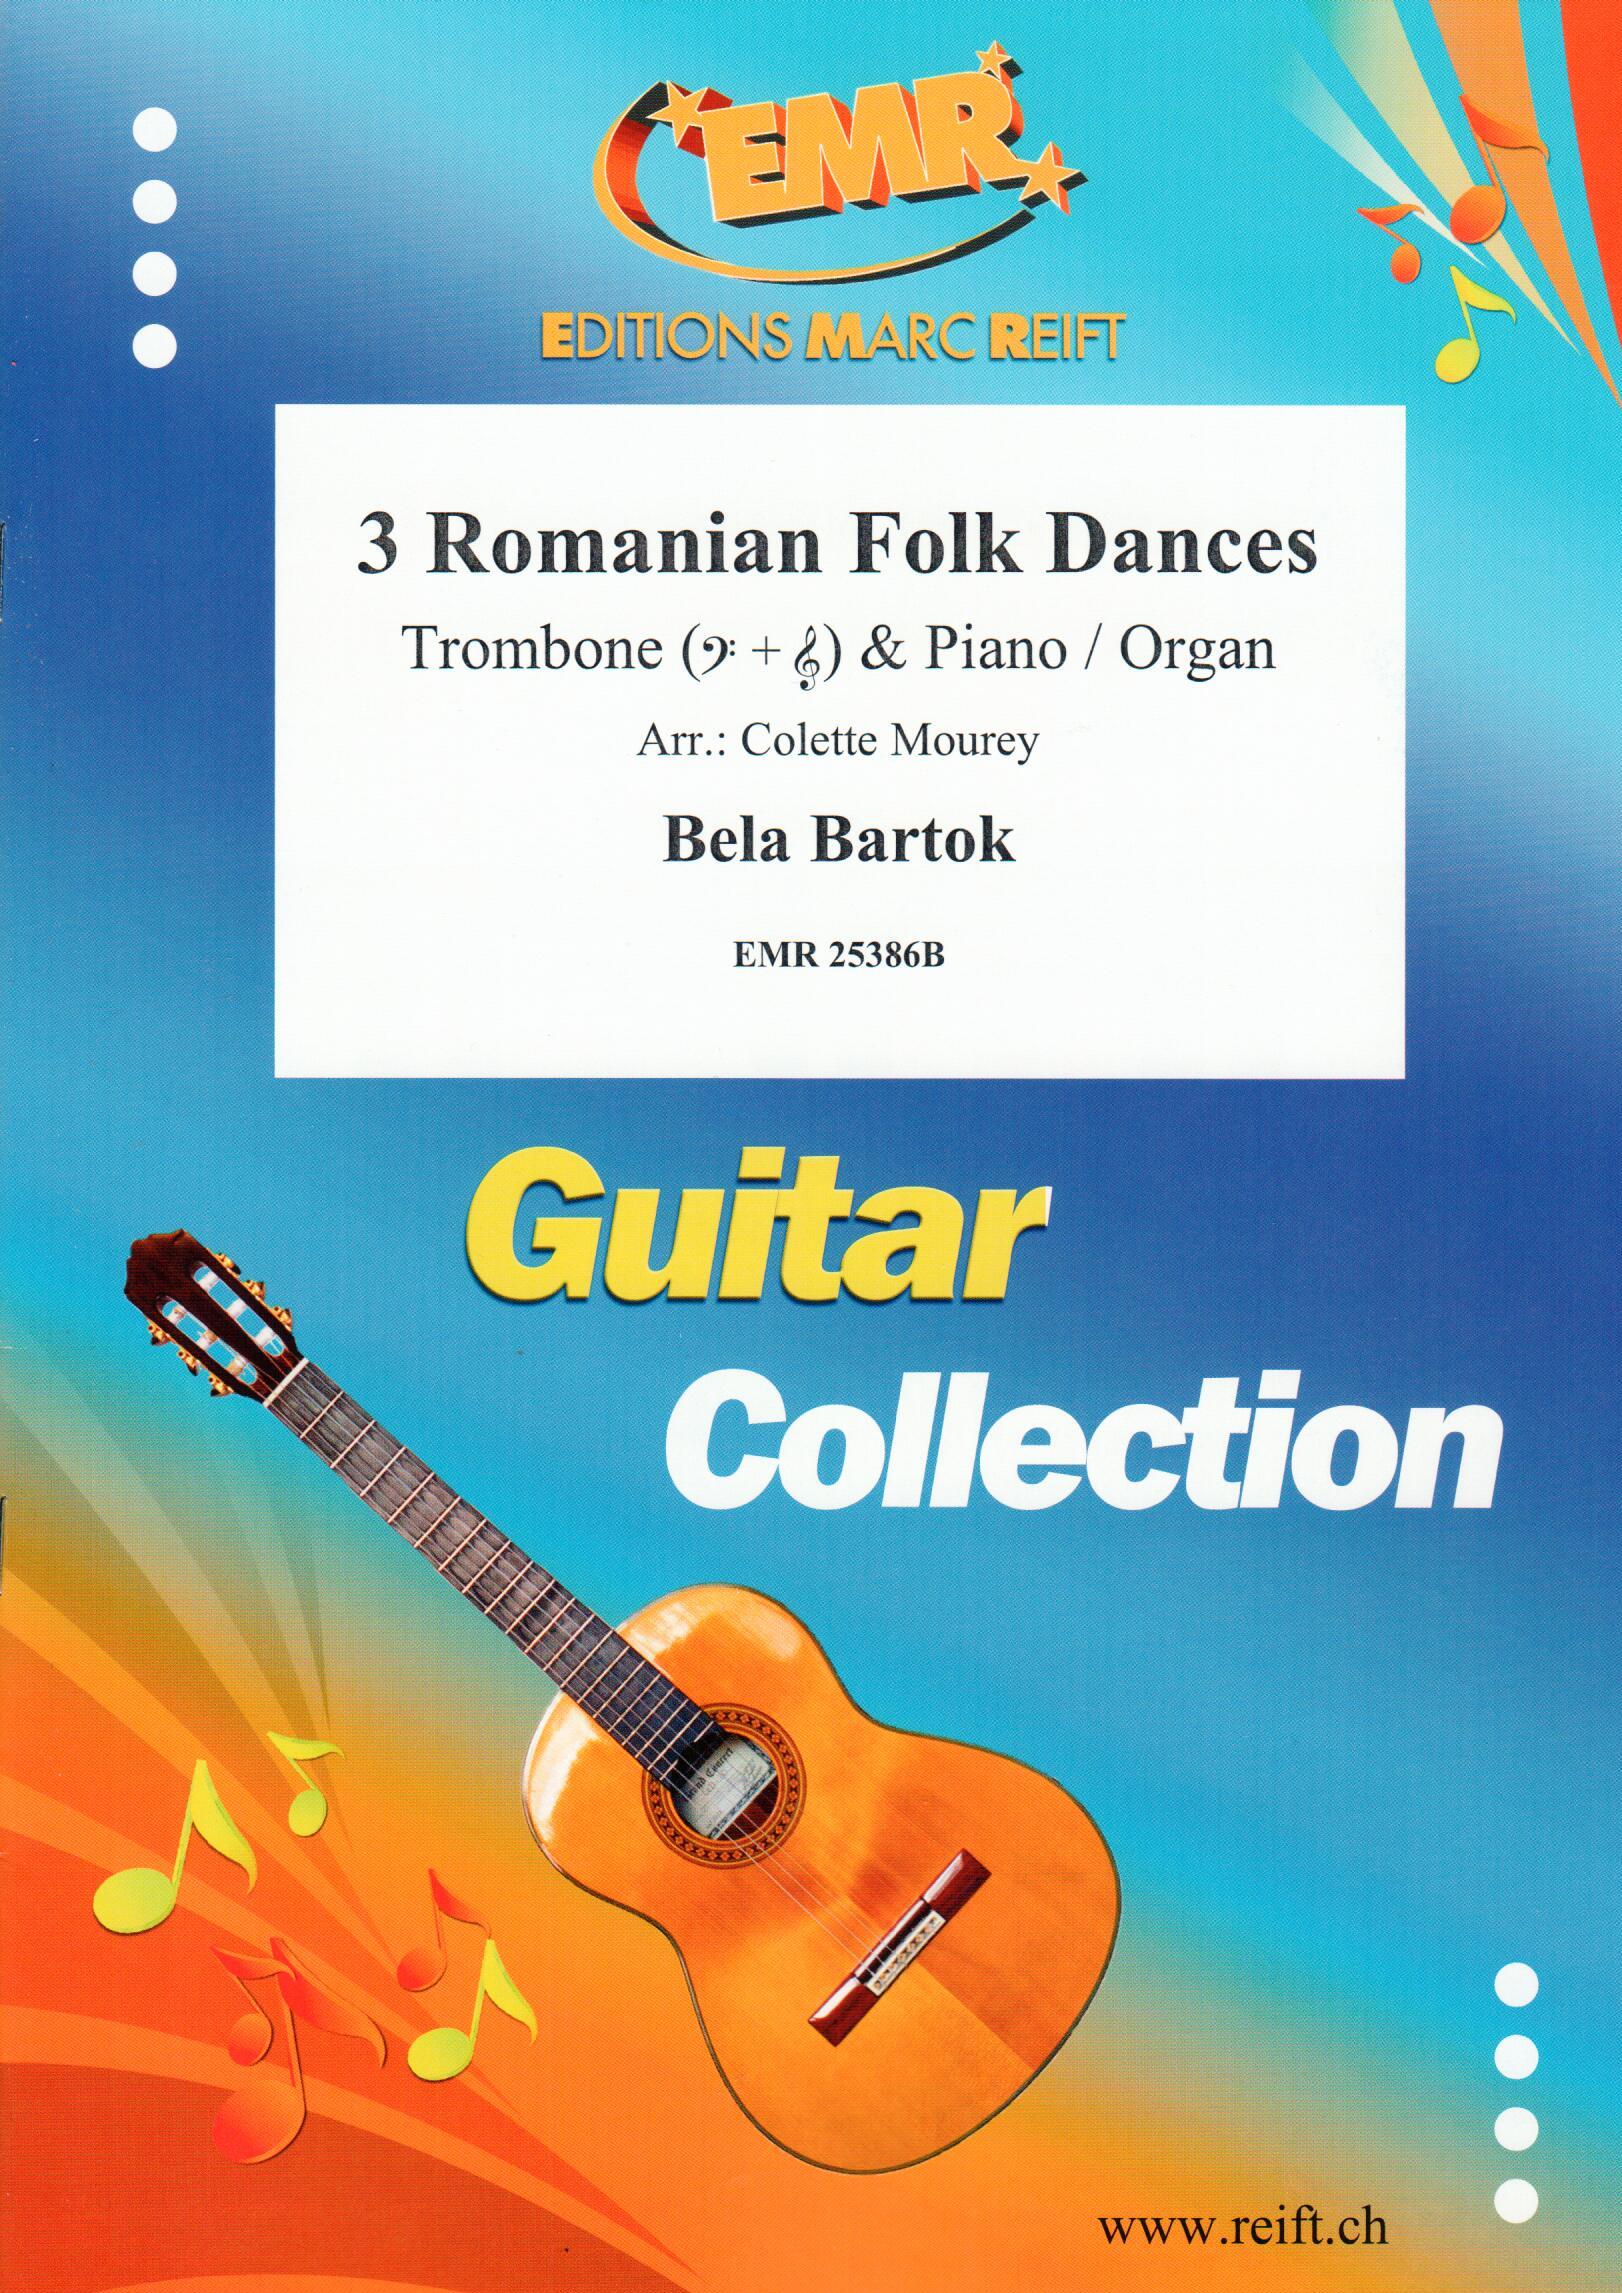 3 ROMANIAN FOLK DANCES, SOLOS - Trombone